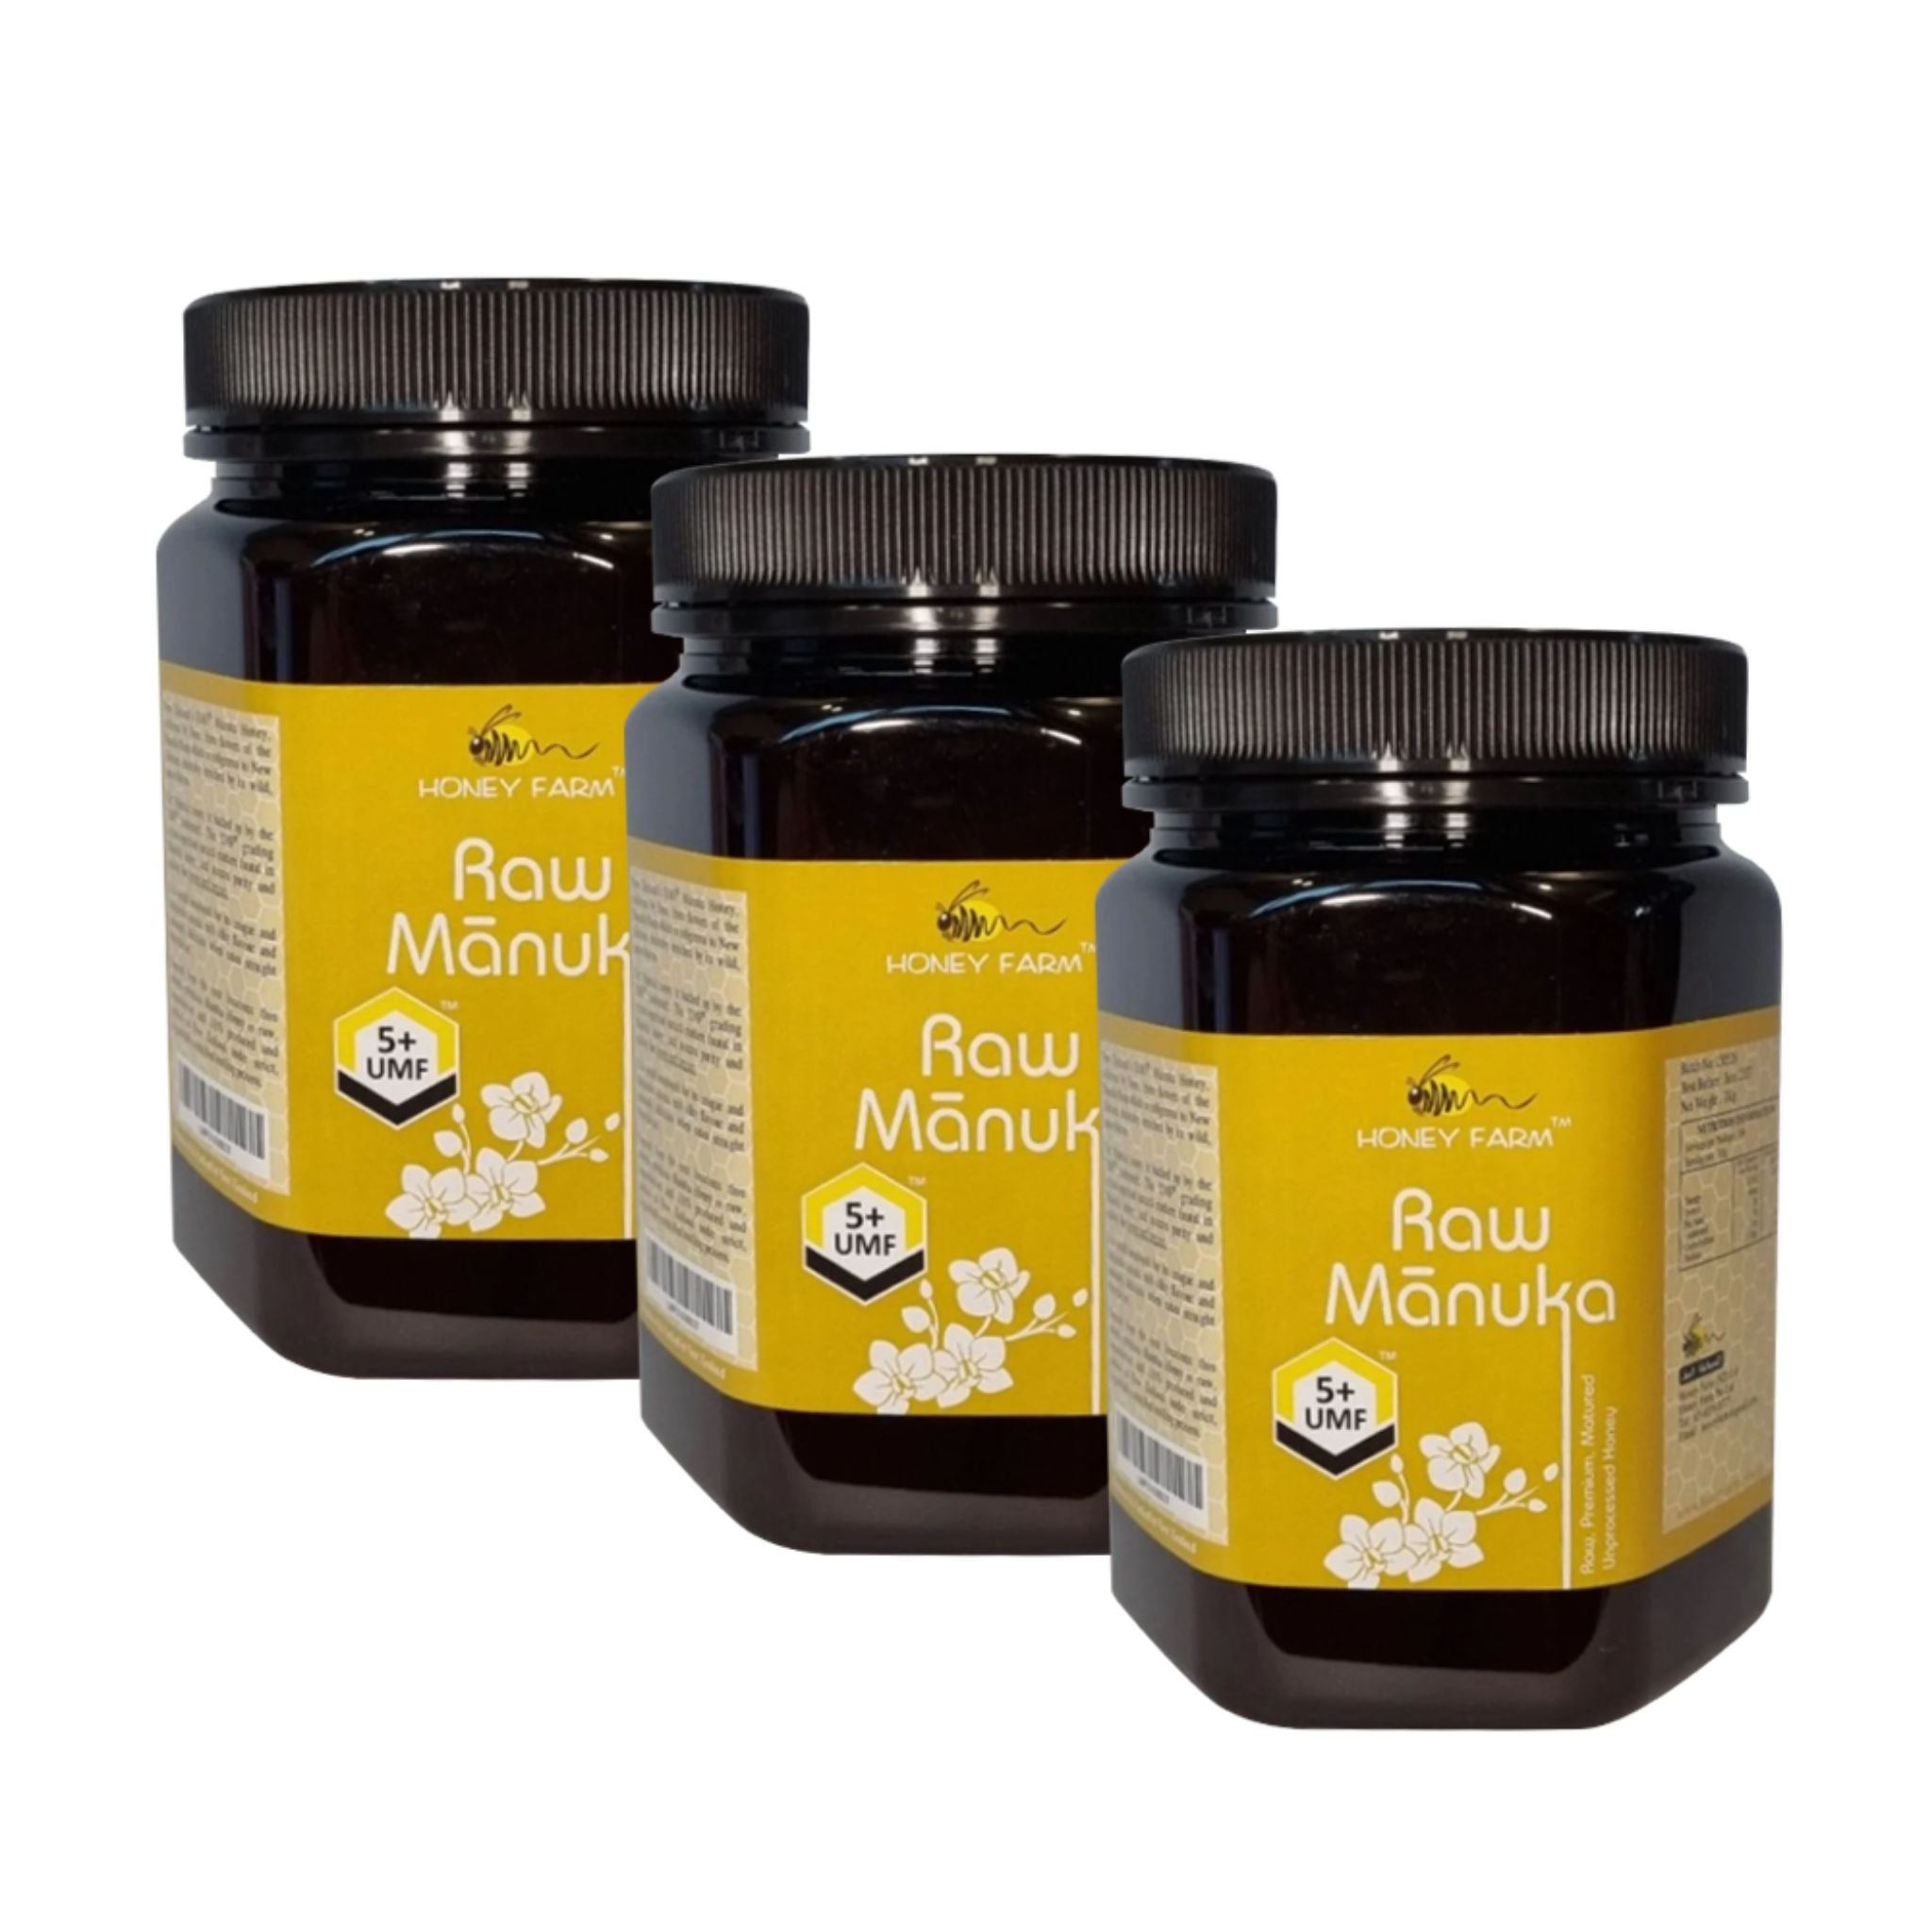 Honey Farm Raw Manuka UMF5+ 1kg (Set of 3)